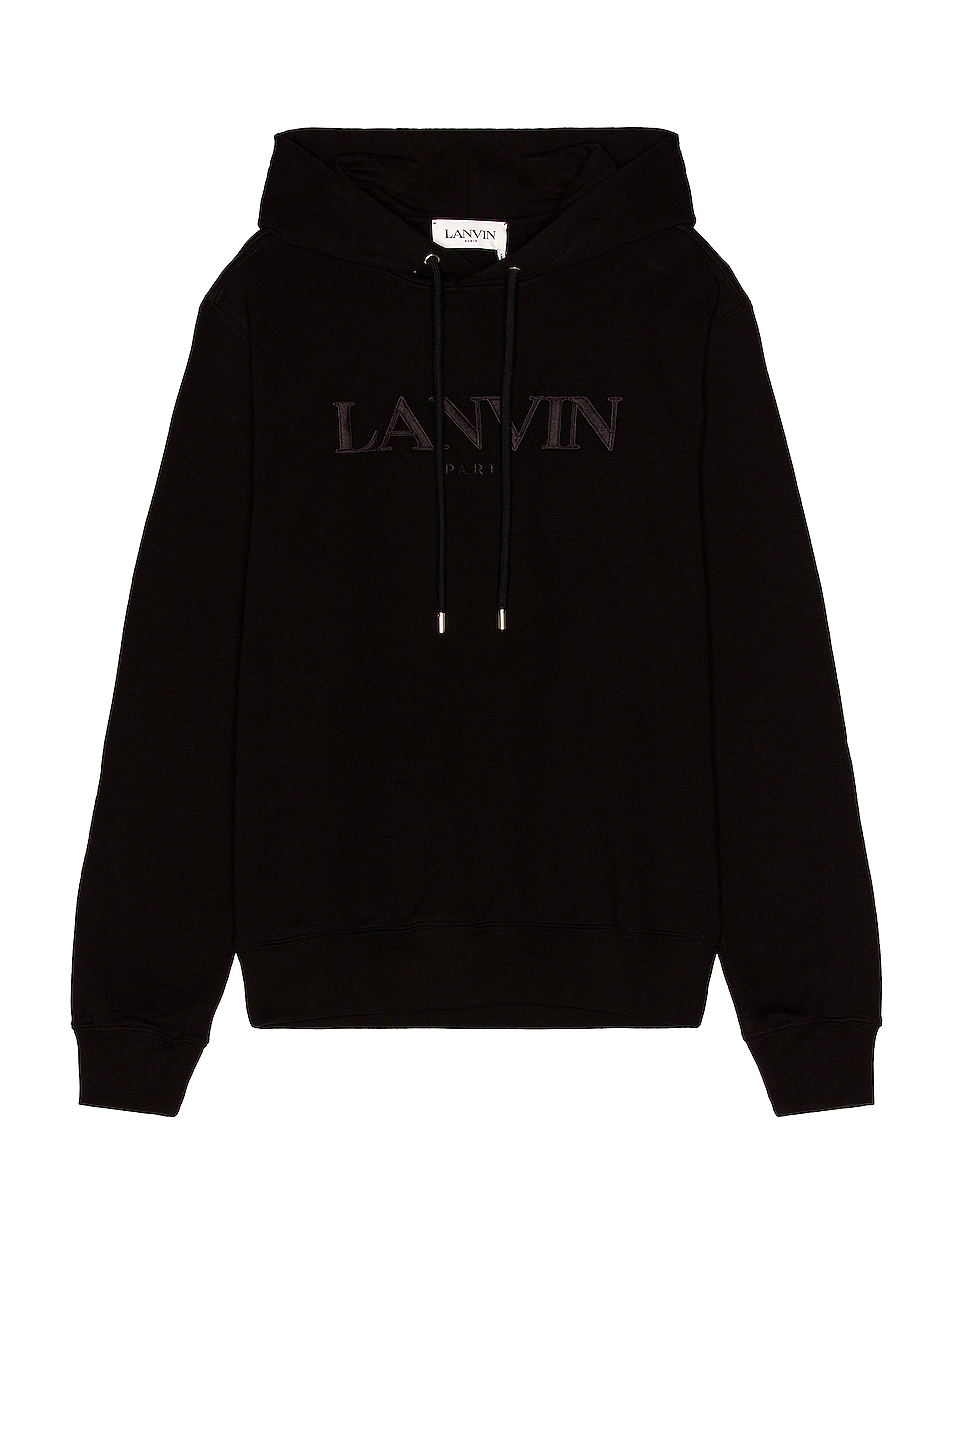 Lanvin Embroidered Hoodie in Black | FWRD